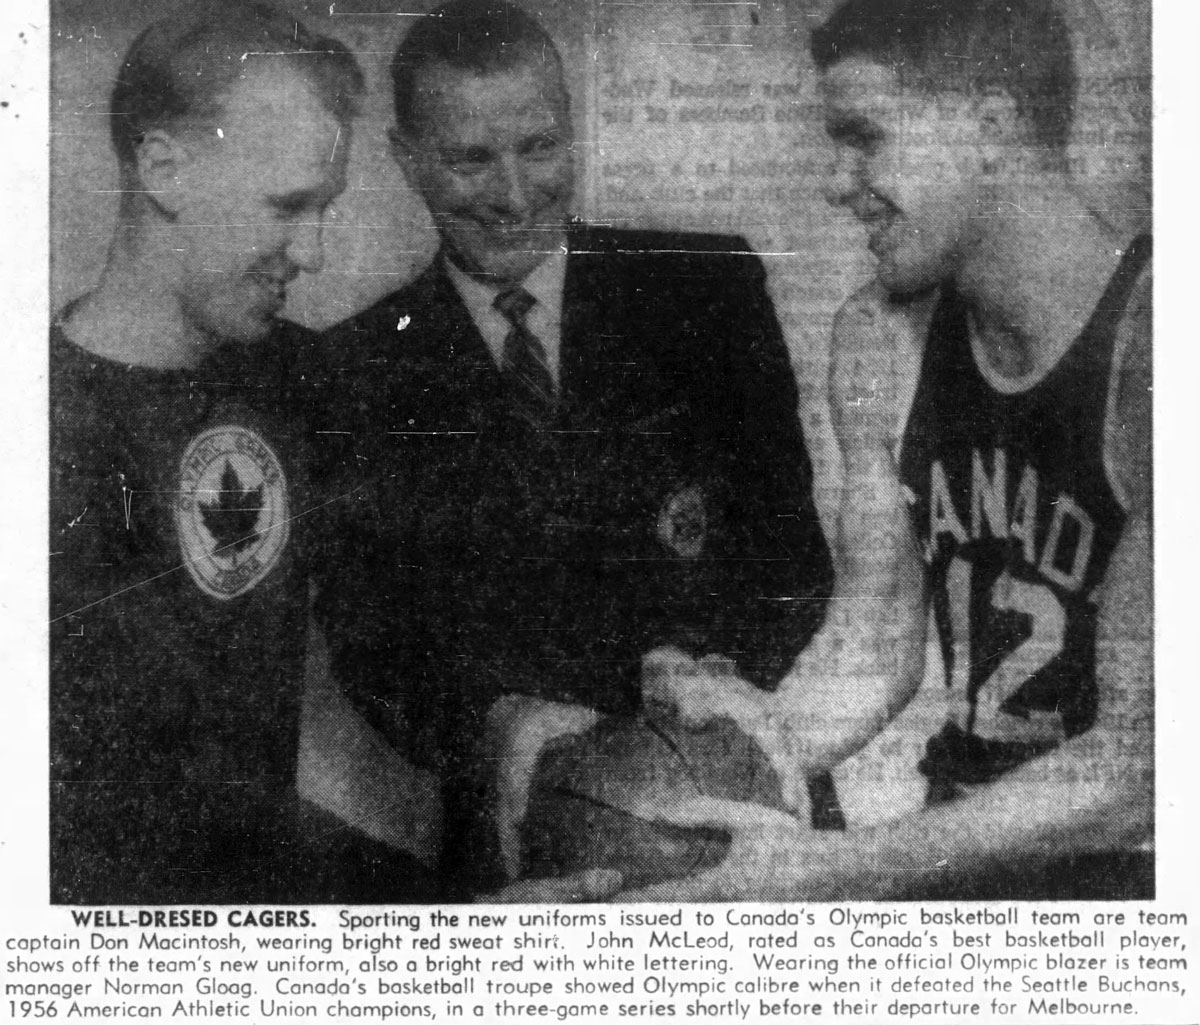 Dan Macintosh And John Mcleod Show Off Canadian Olympic Basketball Uniforms Ahead Of 1956 Men Olympics Basketball Tournament In Melbourne Australia